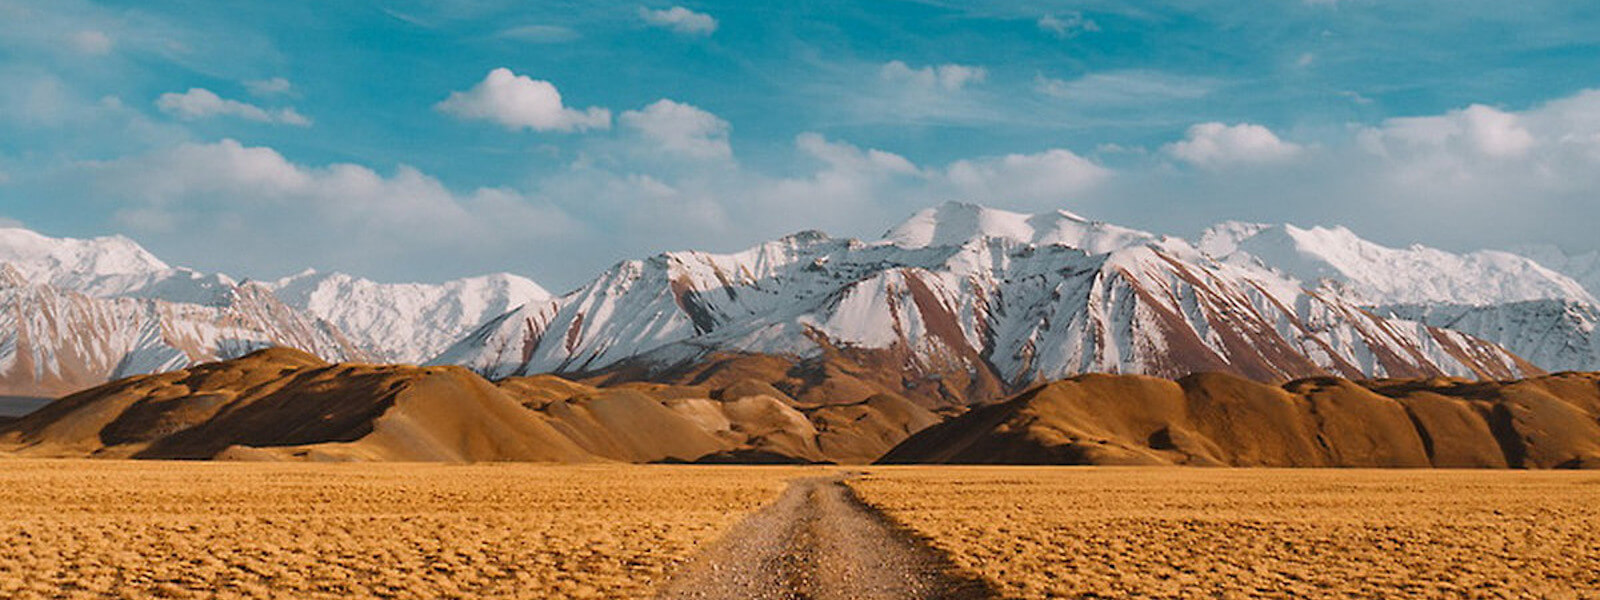 A dirt road leading through the desert toward a snowy mountain range.